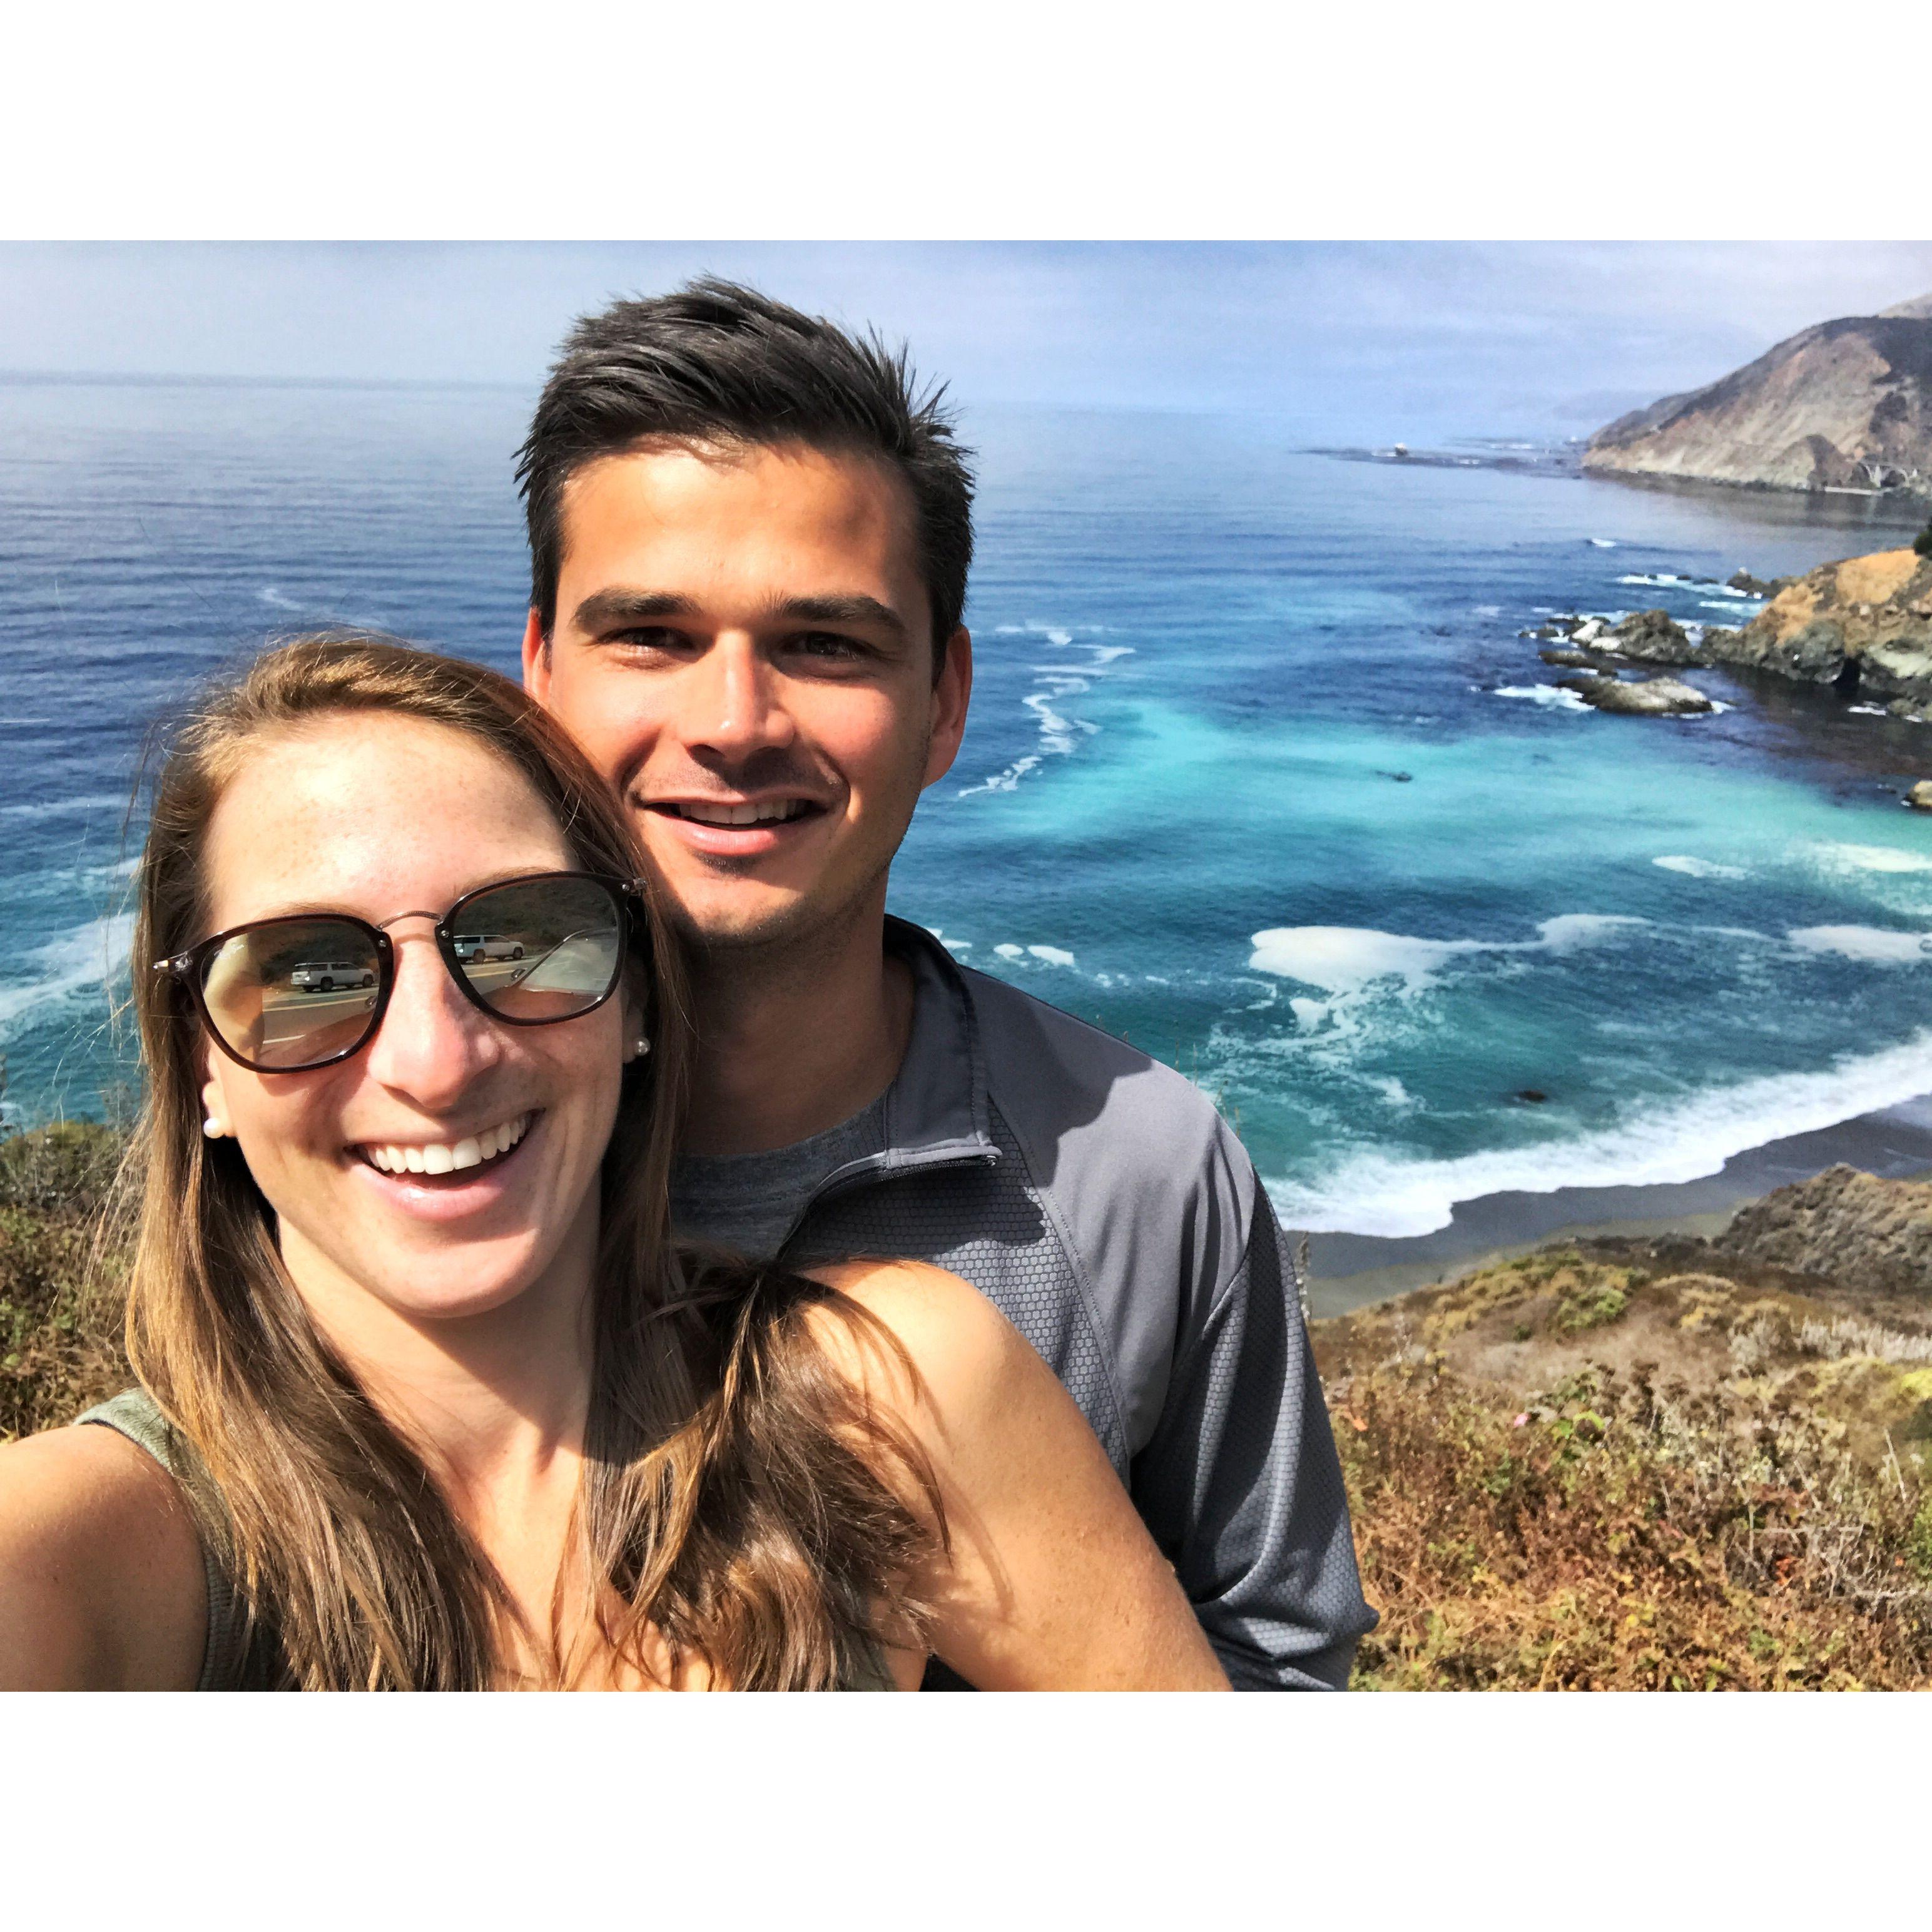 First official trip - California coast September 2018